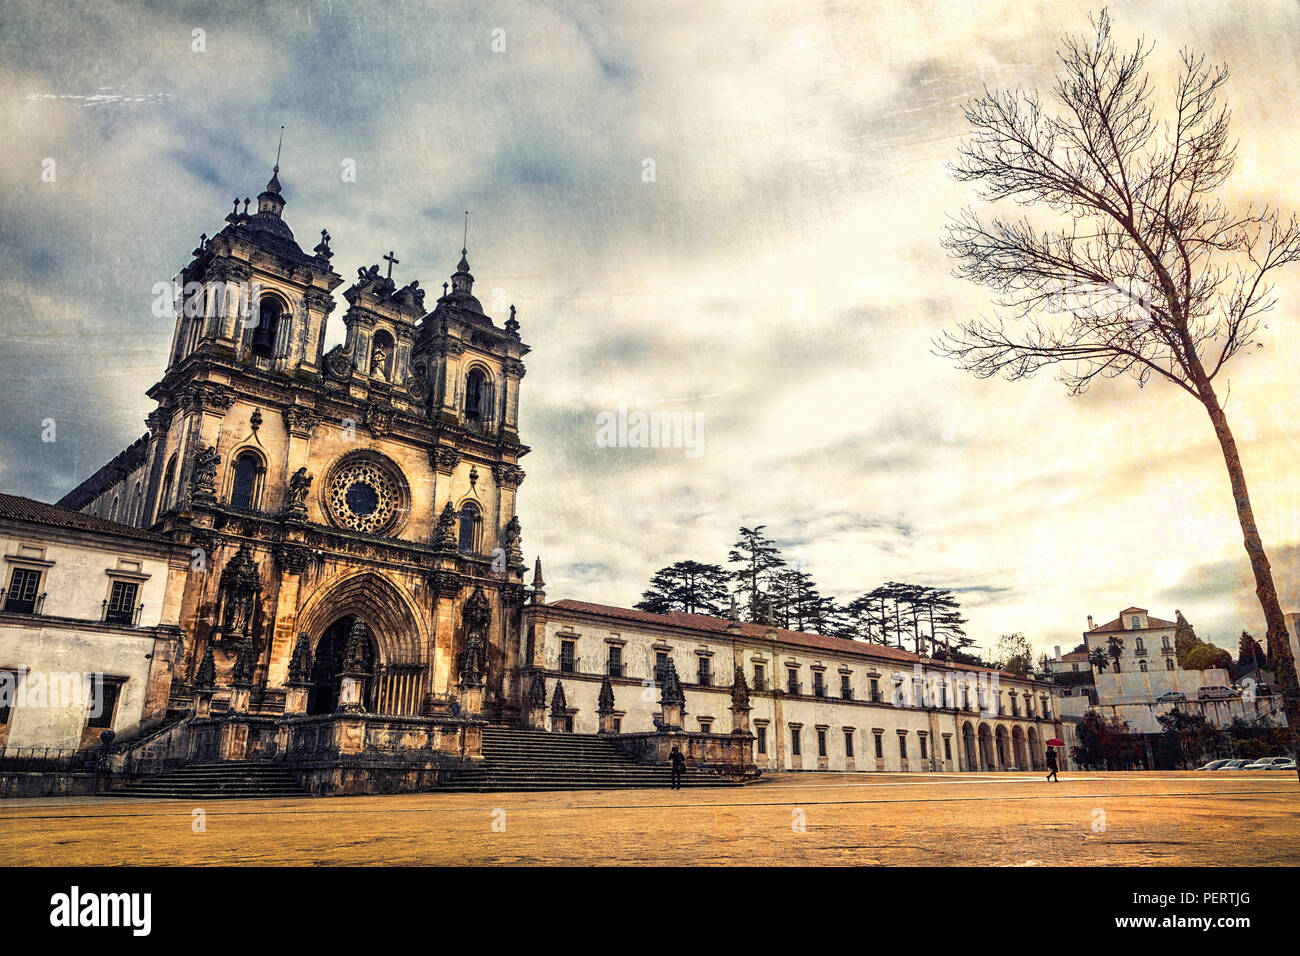 Alcobaca monastery impressionnant,vue panoramique,Portugal. Banque D'Images